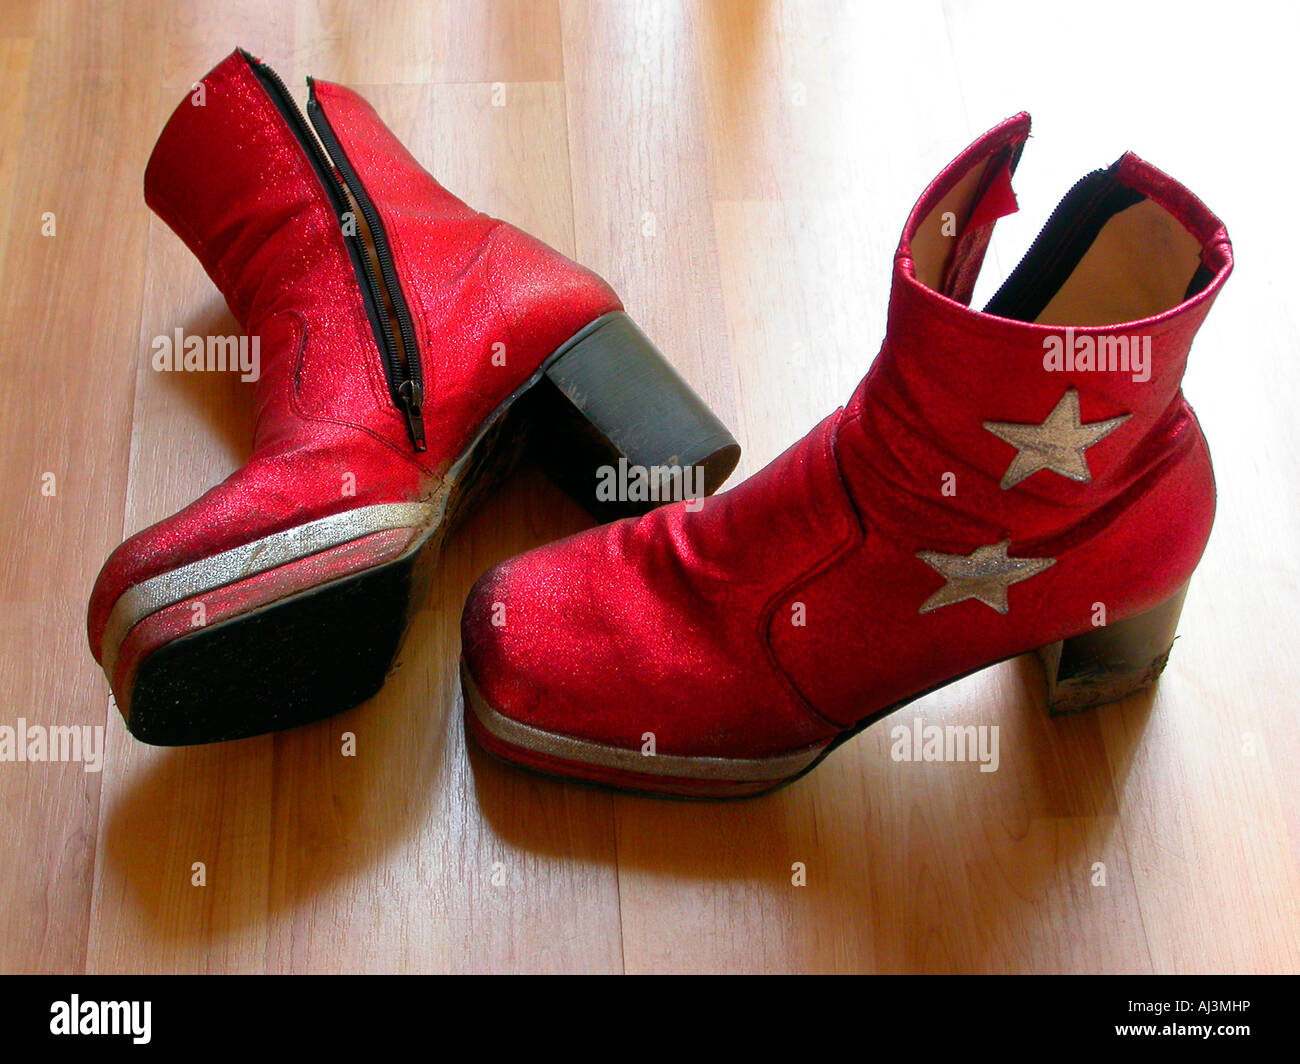 Pair of Muddy Platform Disco Boots Stock Photo - Alamy